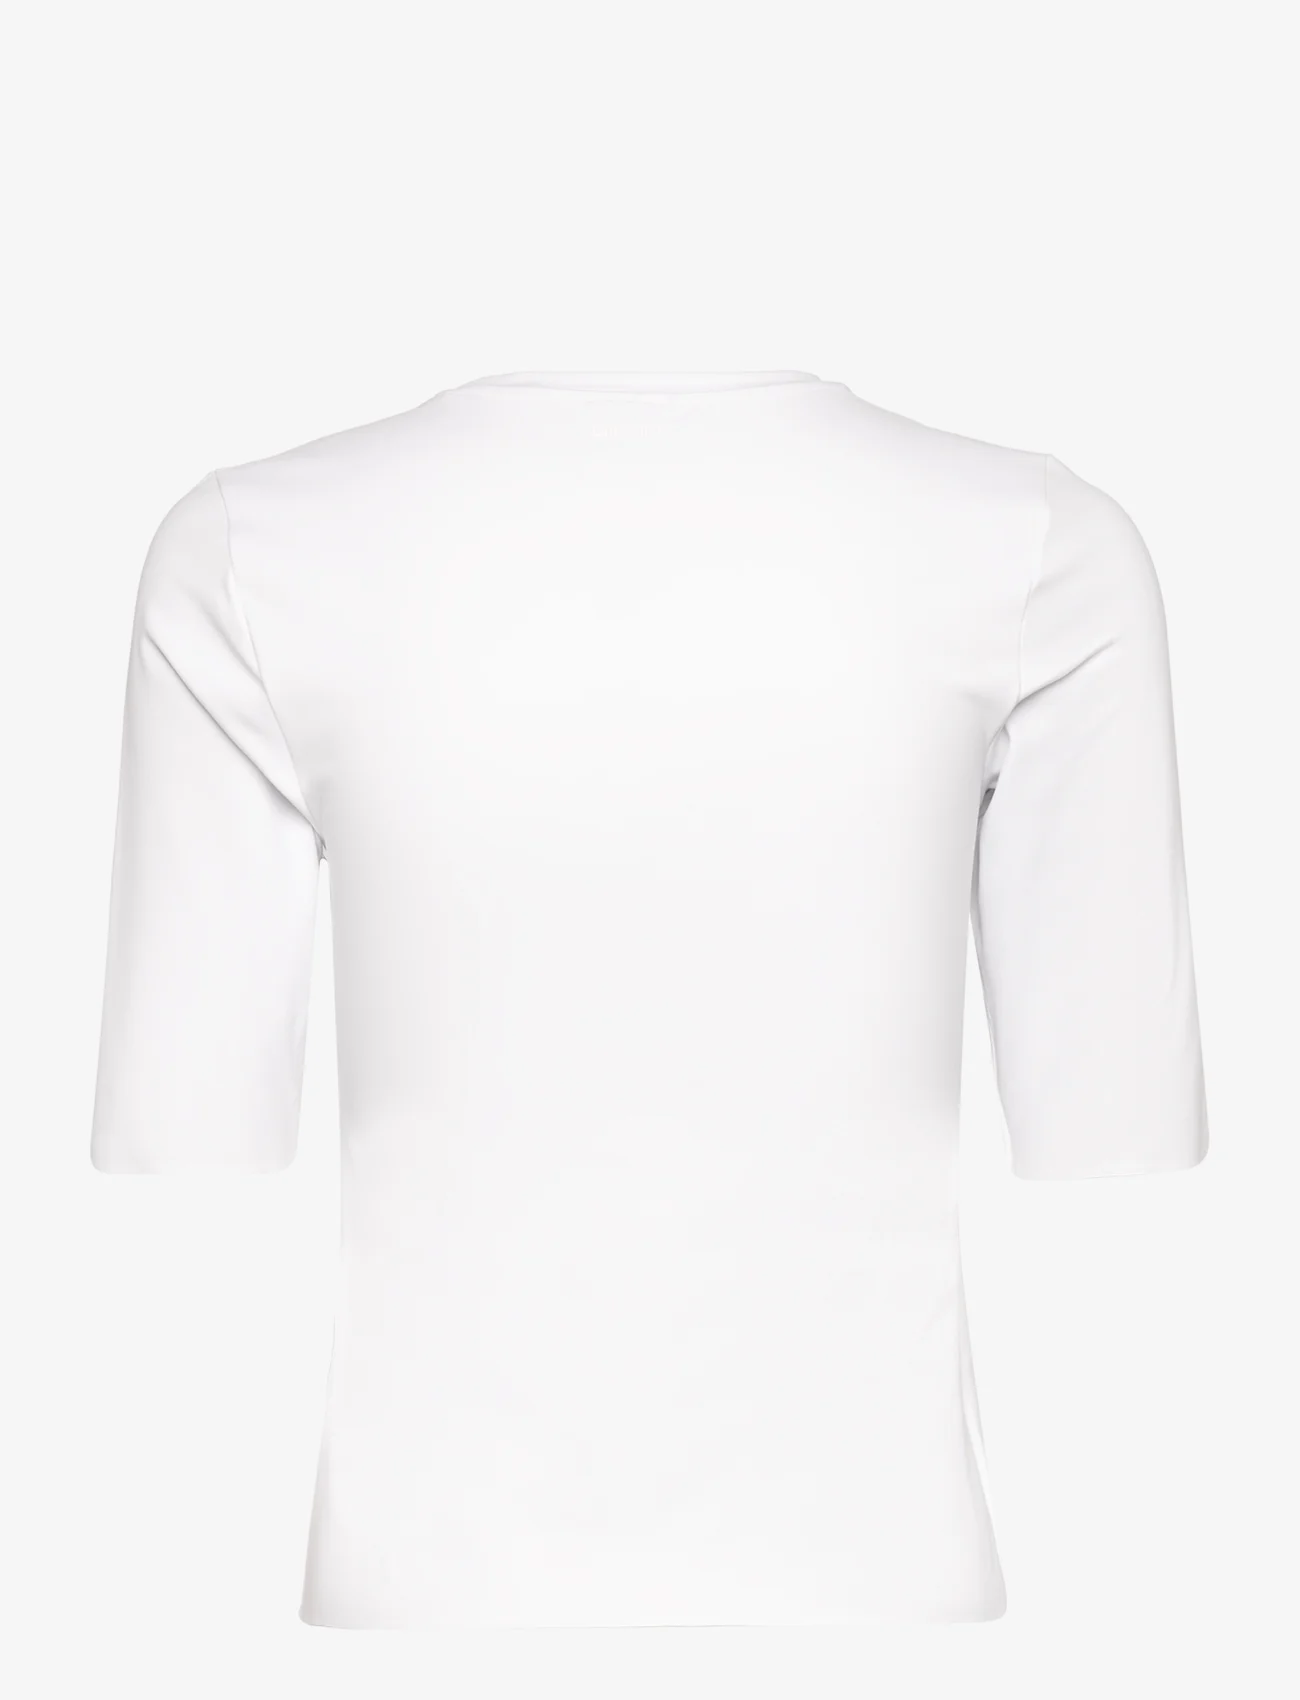 AIM'N - Sense Half Sleeve Top - white - 1